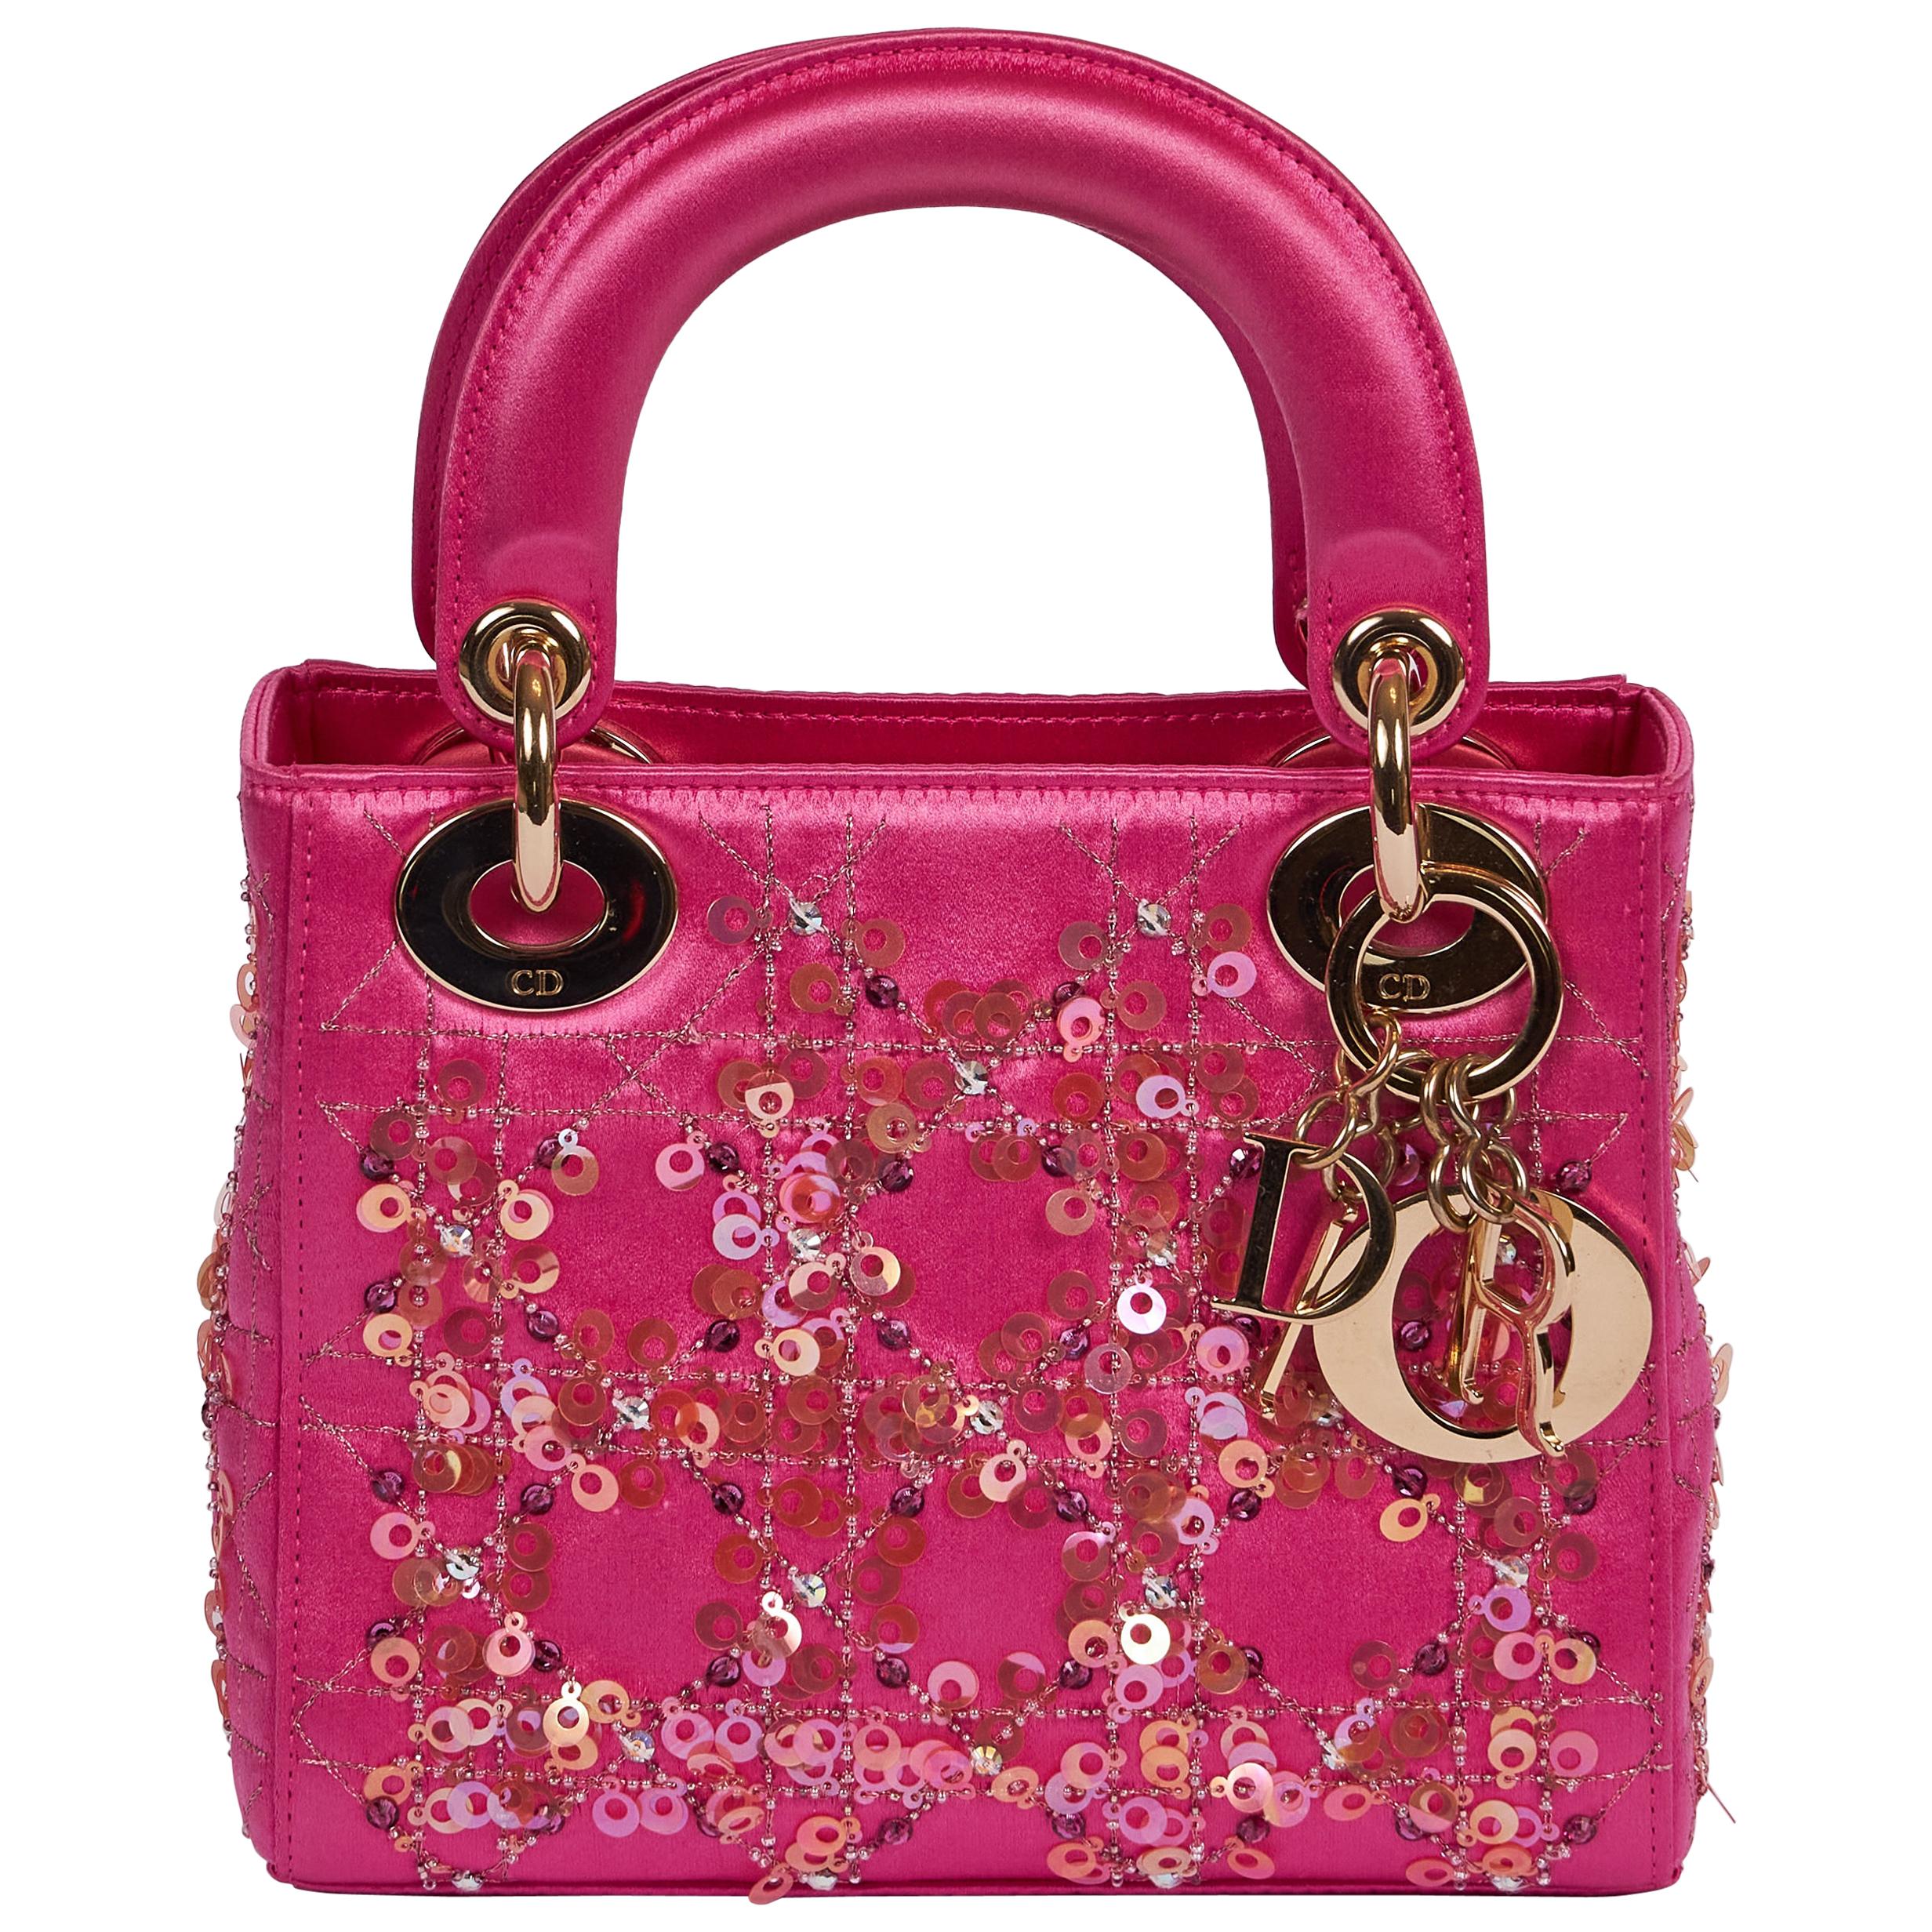 Such a cute pink bag | Pink bag, Bags, Pretty bags